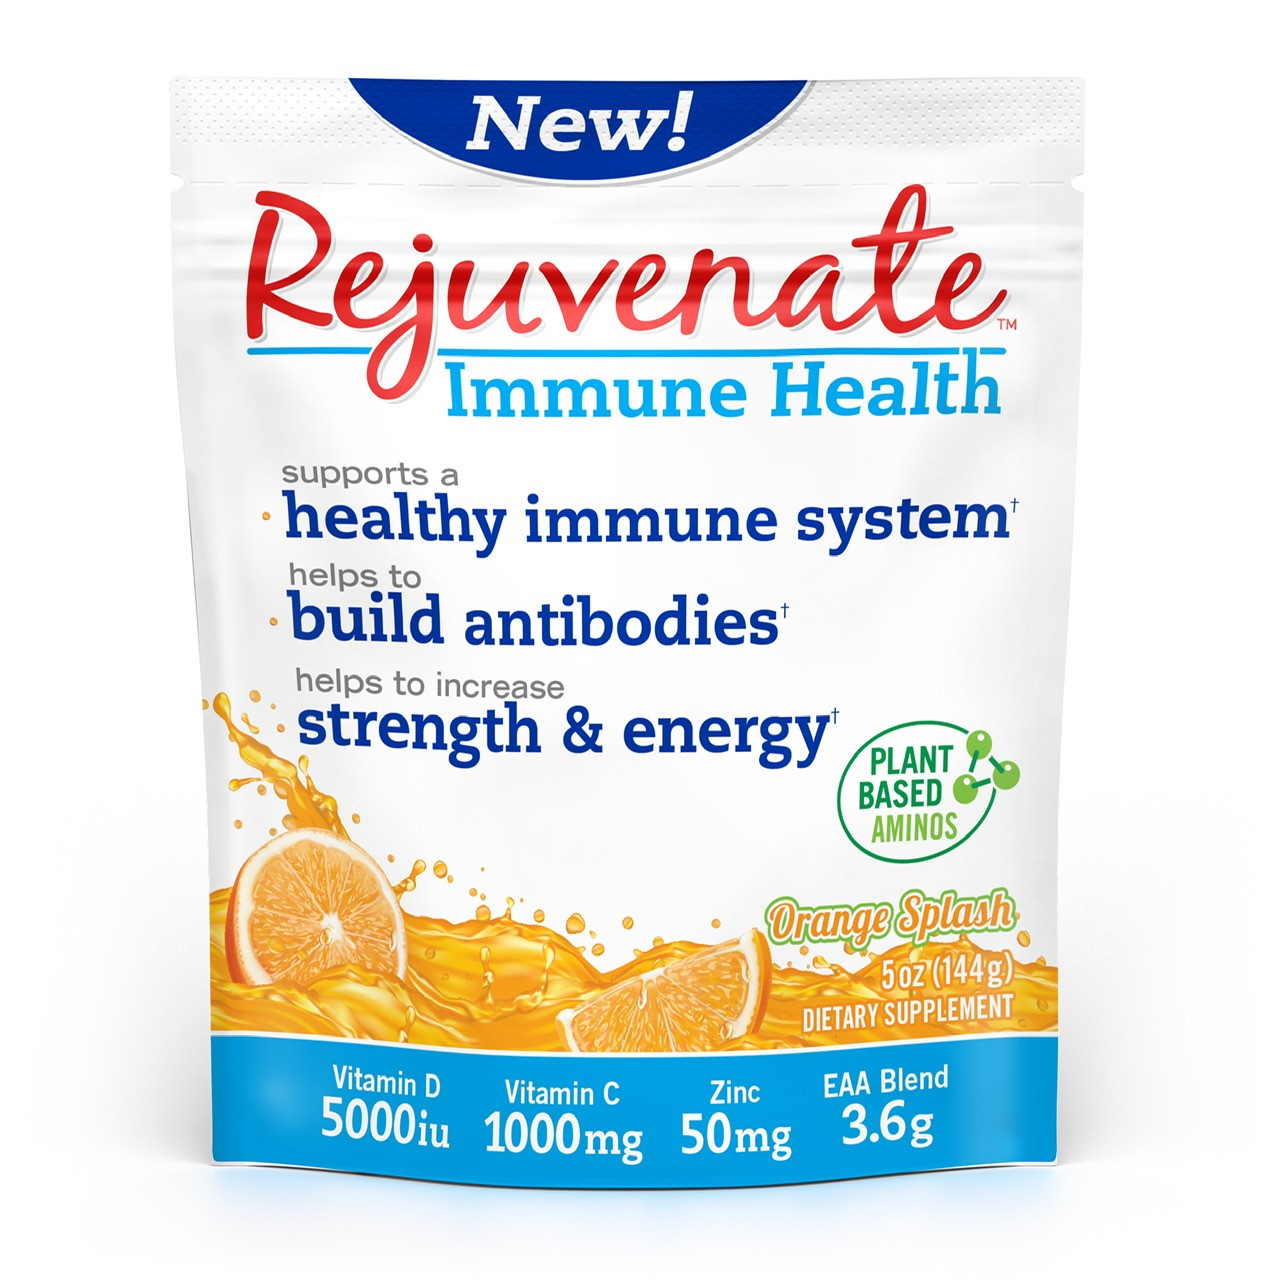 CORRECTING and REPLACING Element Nutritional Sciences Announces Rejuvenate™  Immune Health Now Available Through .com